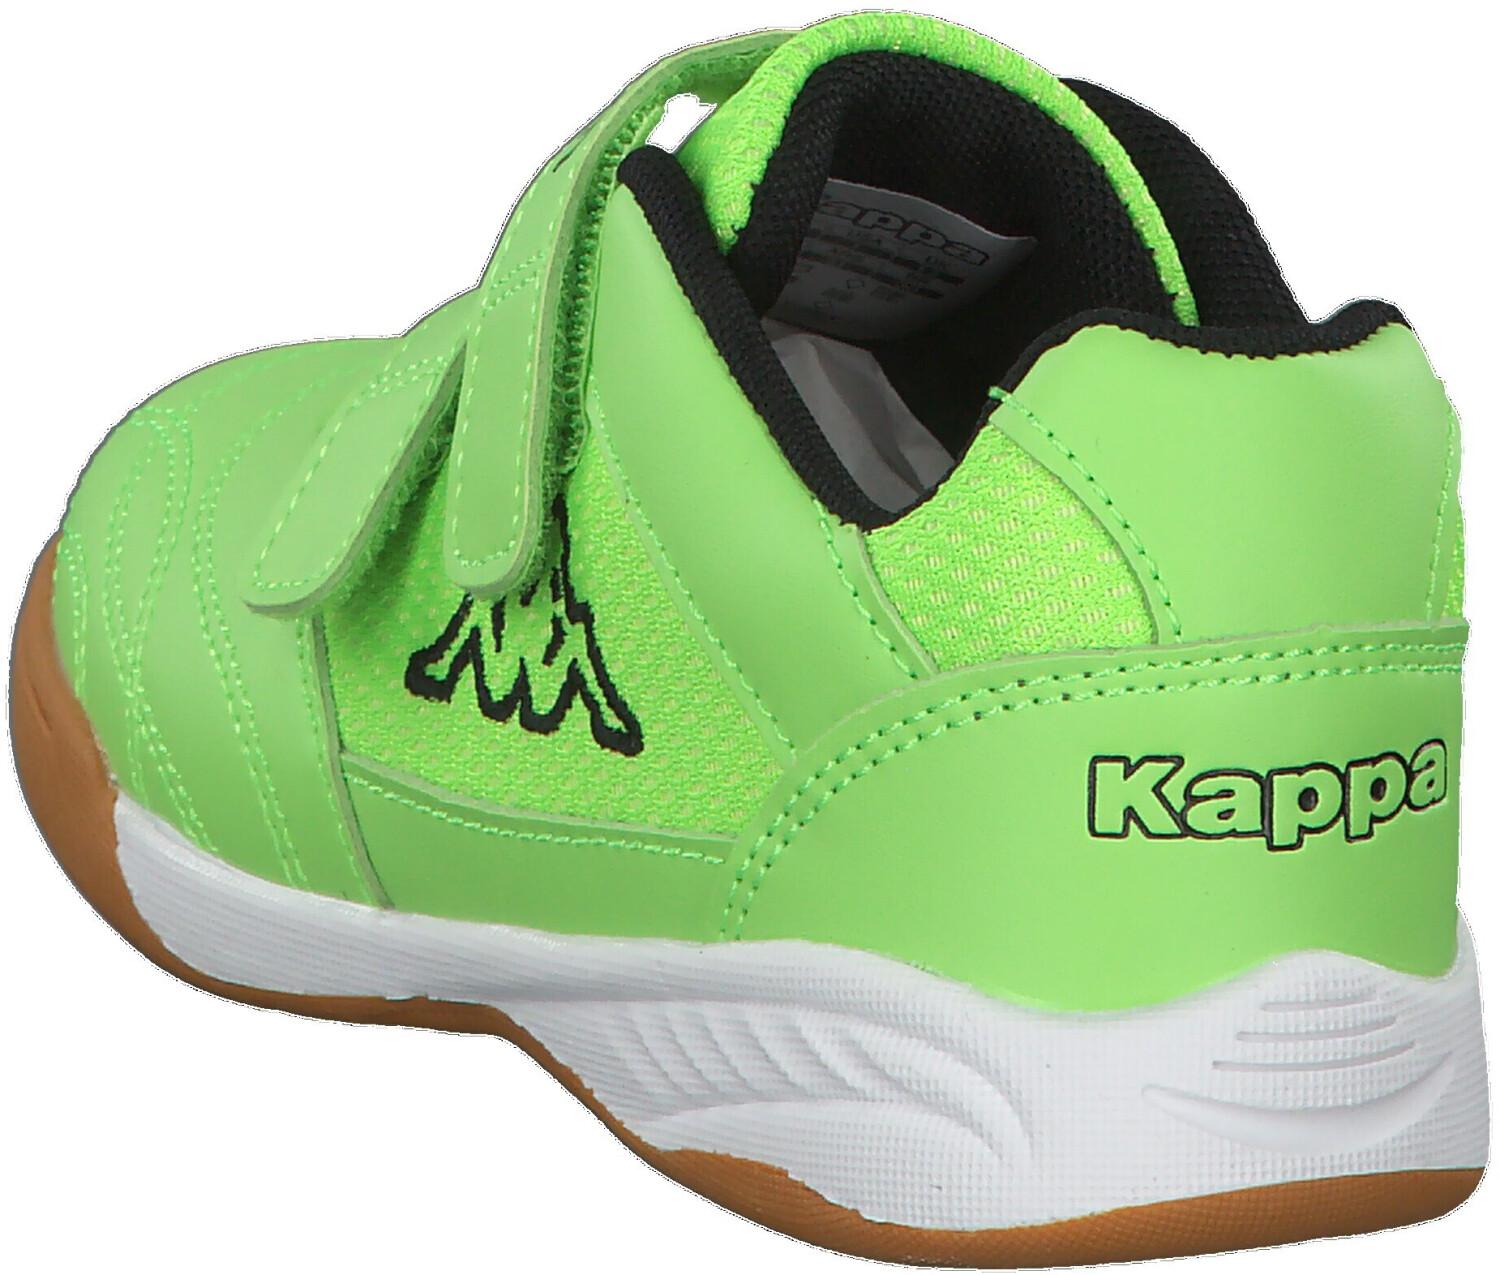 Kappa 260509K Green/Black 19,00 bei ab € | Preisvergleich